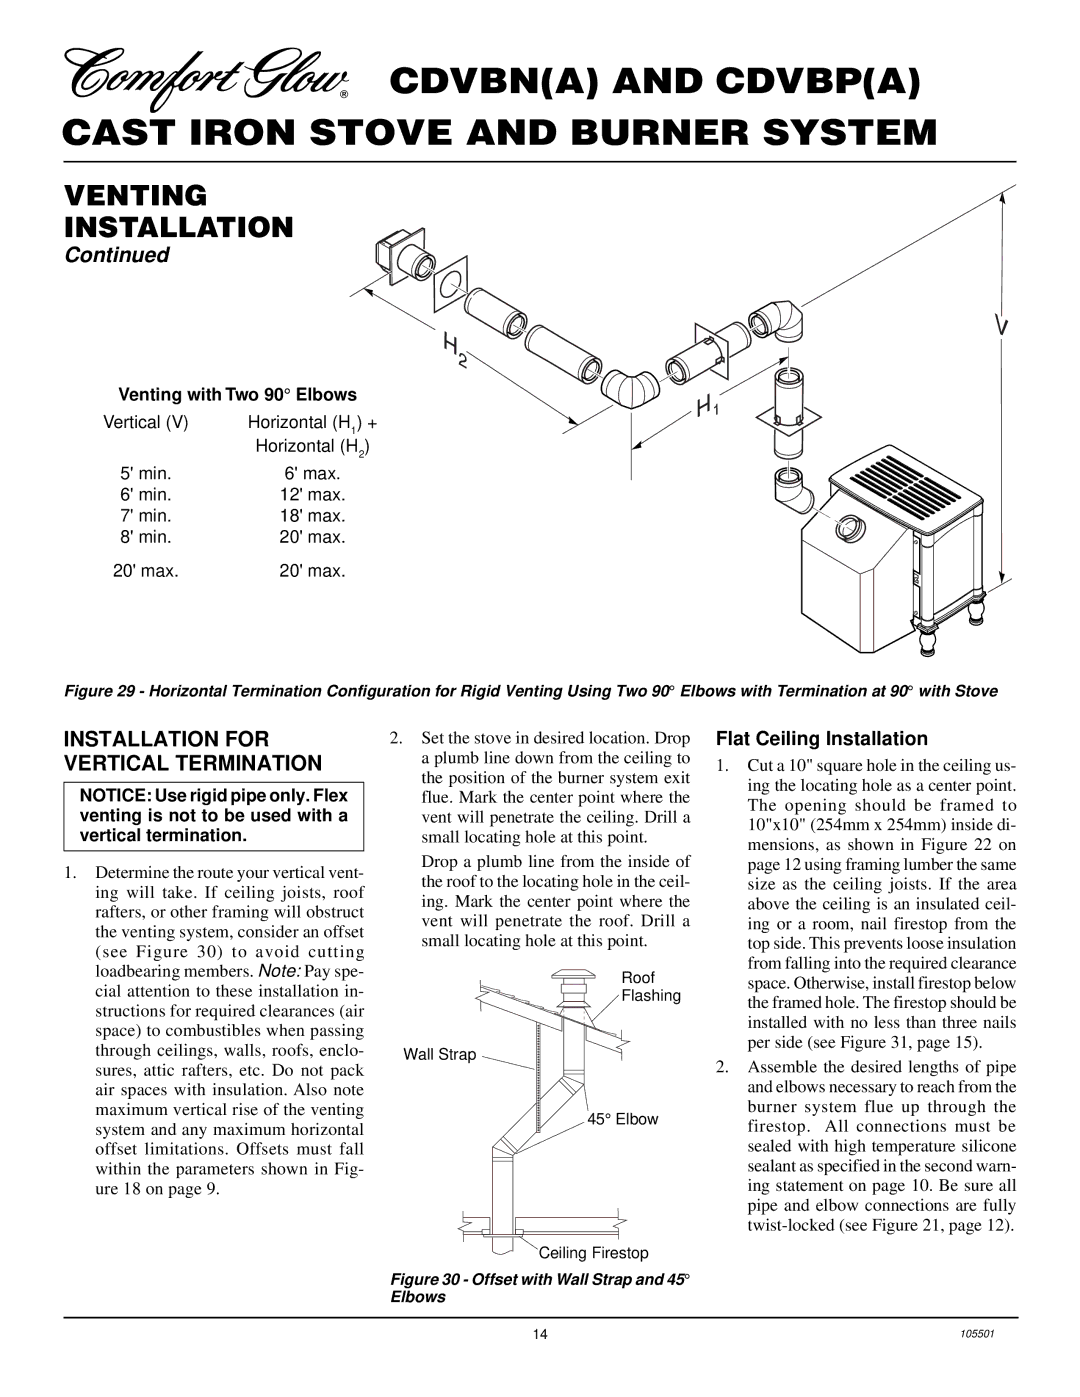 Desa CDVBP(A) Installation for Vertical Termination, Flat Ceiling Installation, Roof Flashing Wall Strap Elbow 